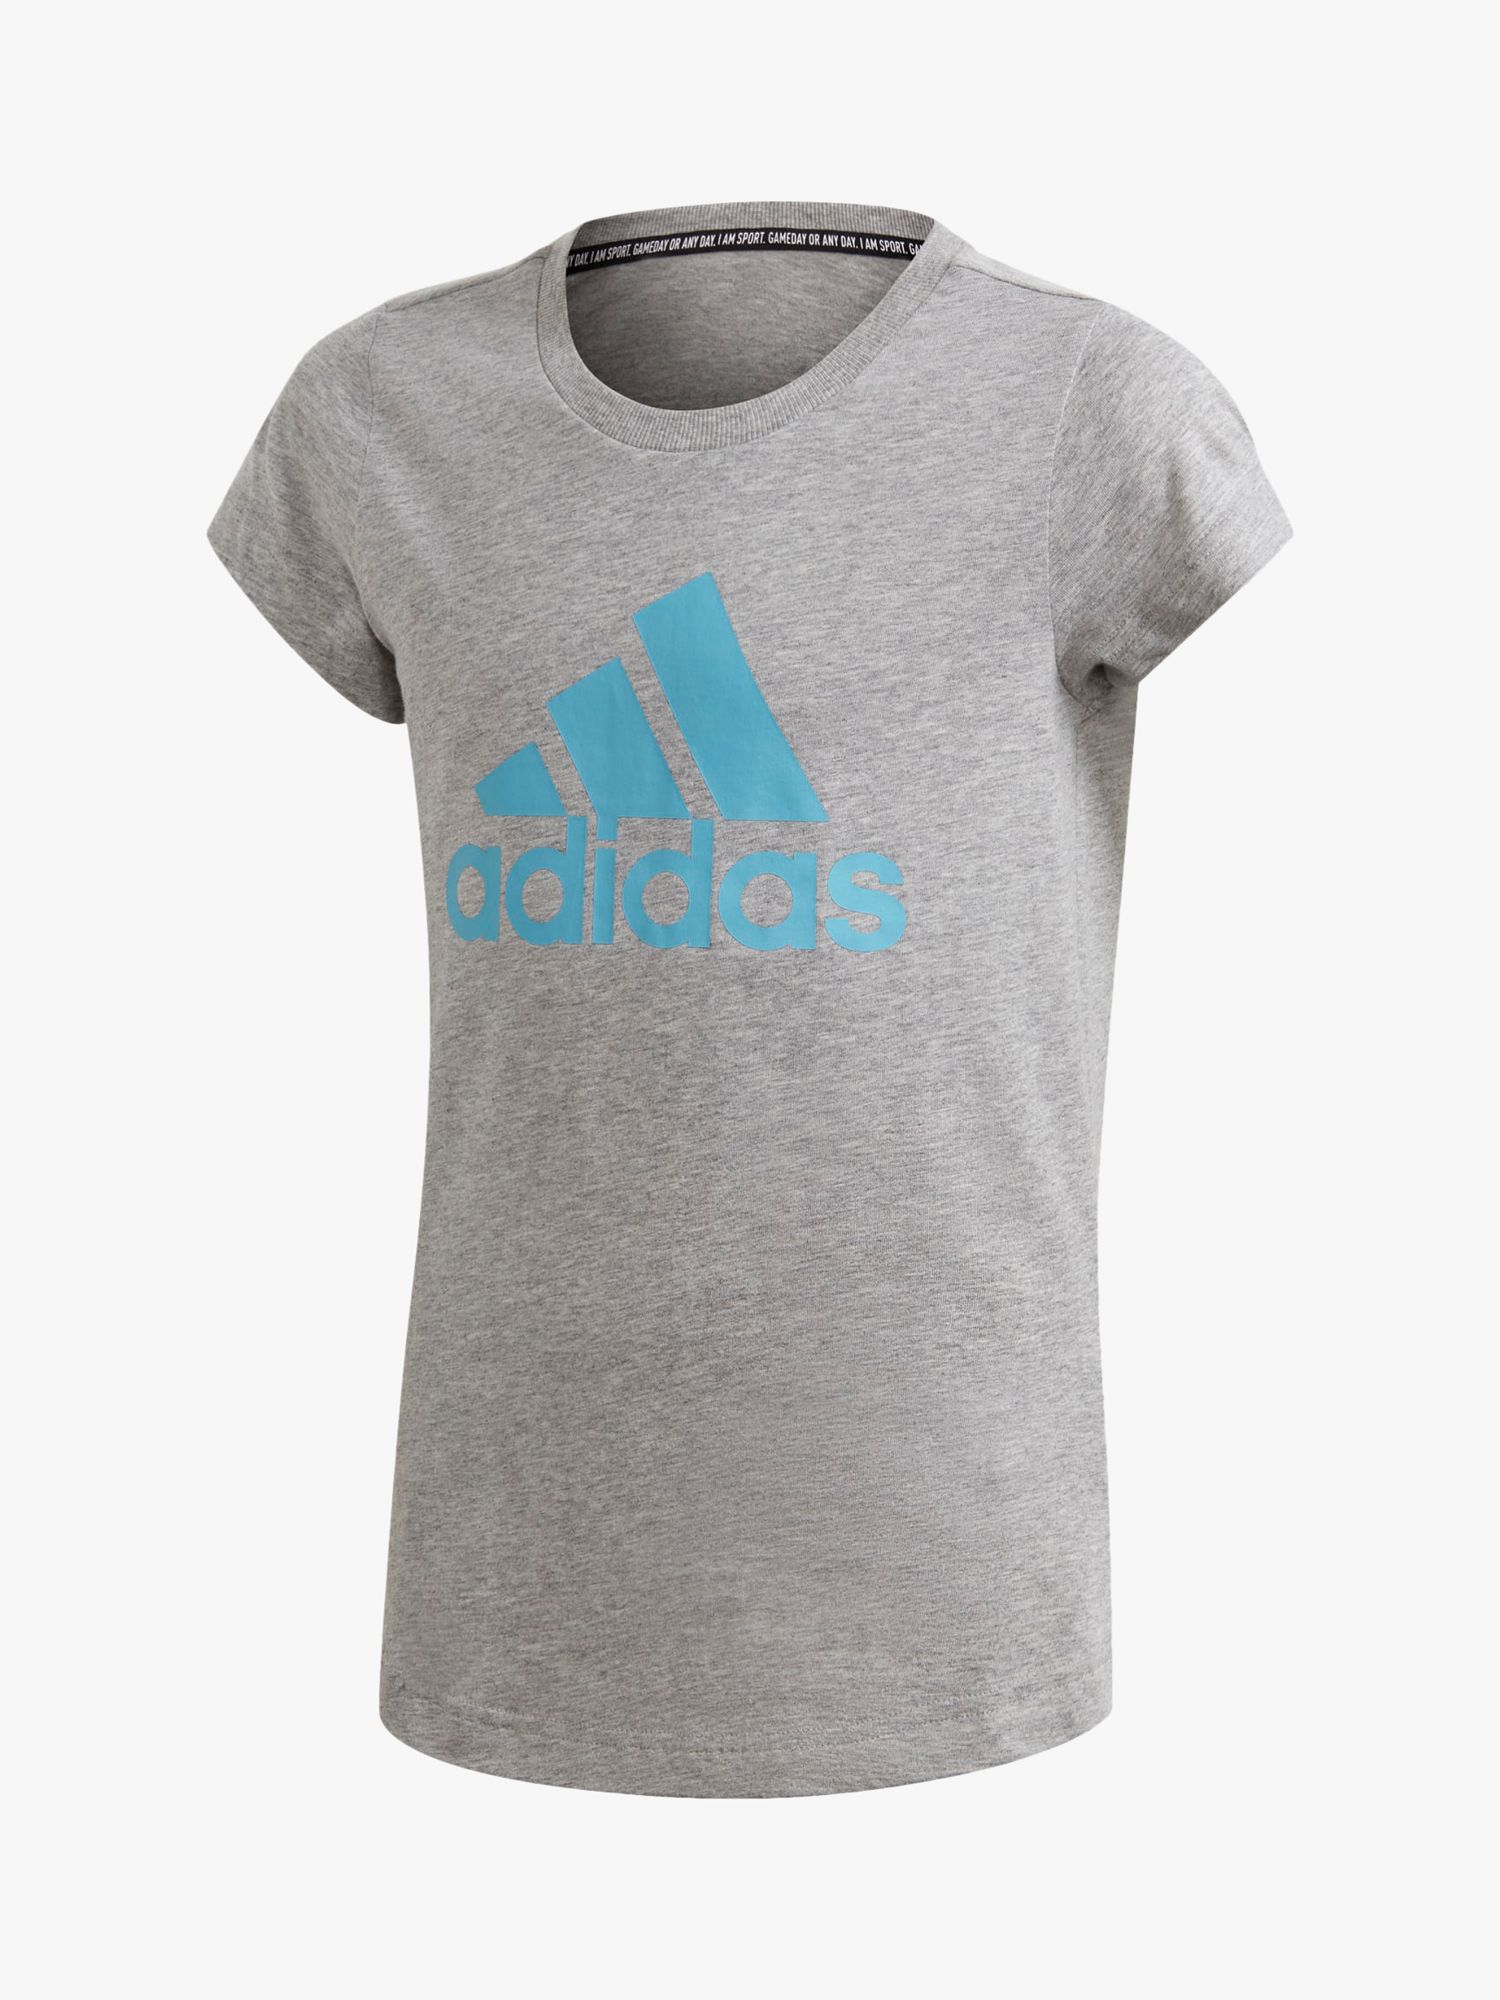 adidas girl shirts